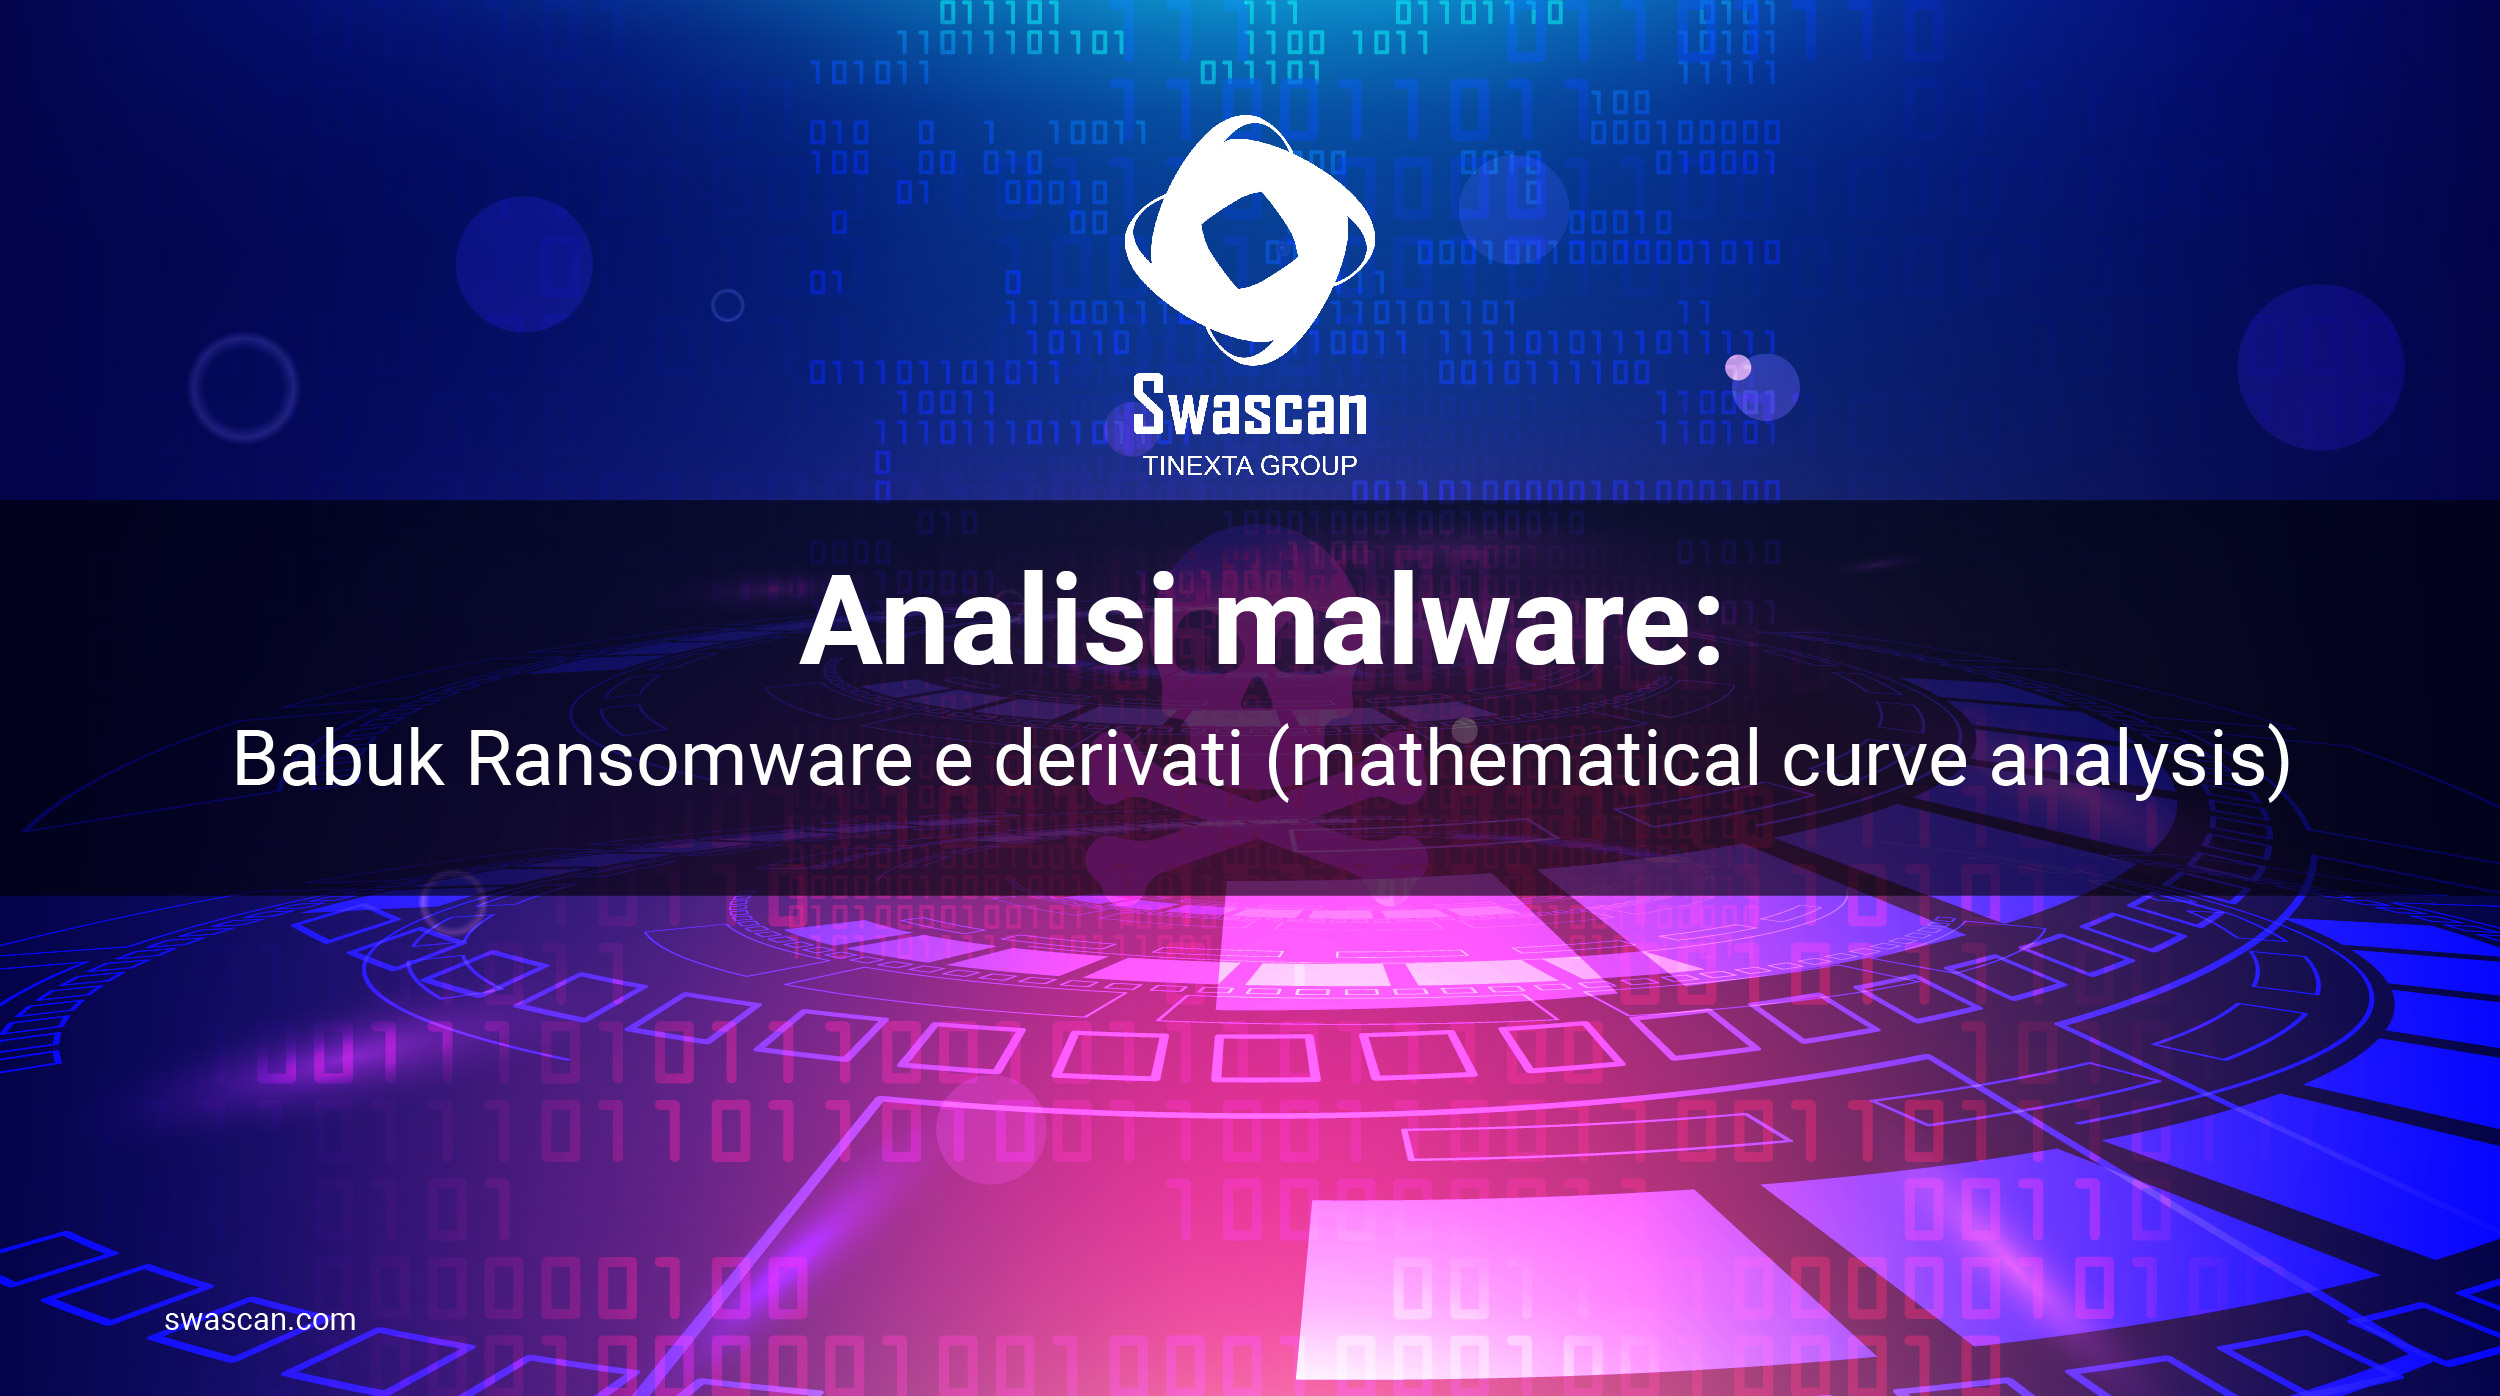 Malware analysis: Babuk Ransomware (mathematical curve analysis)